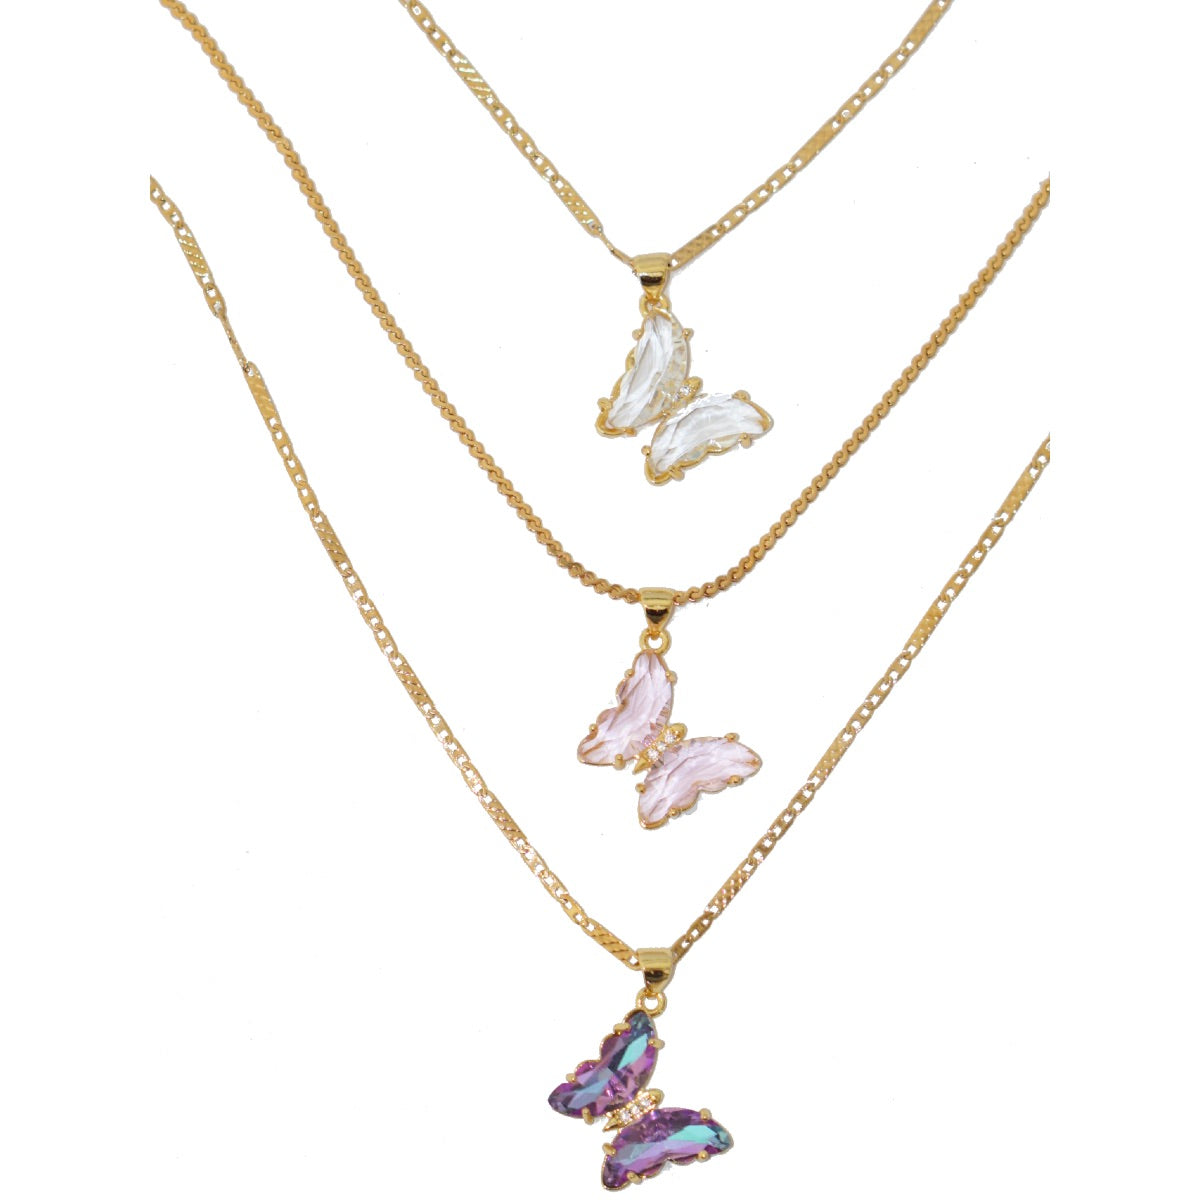 Glass butterfly necklace